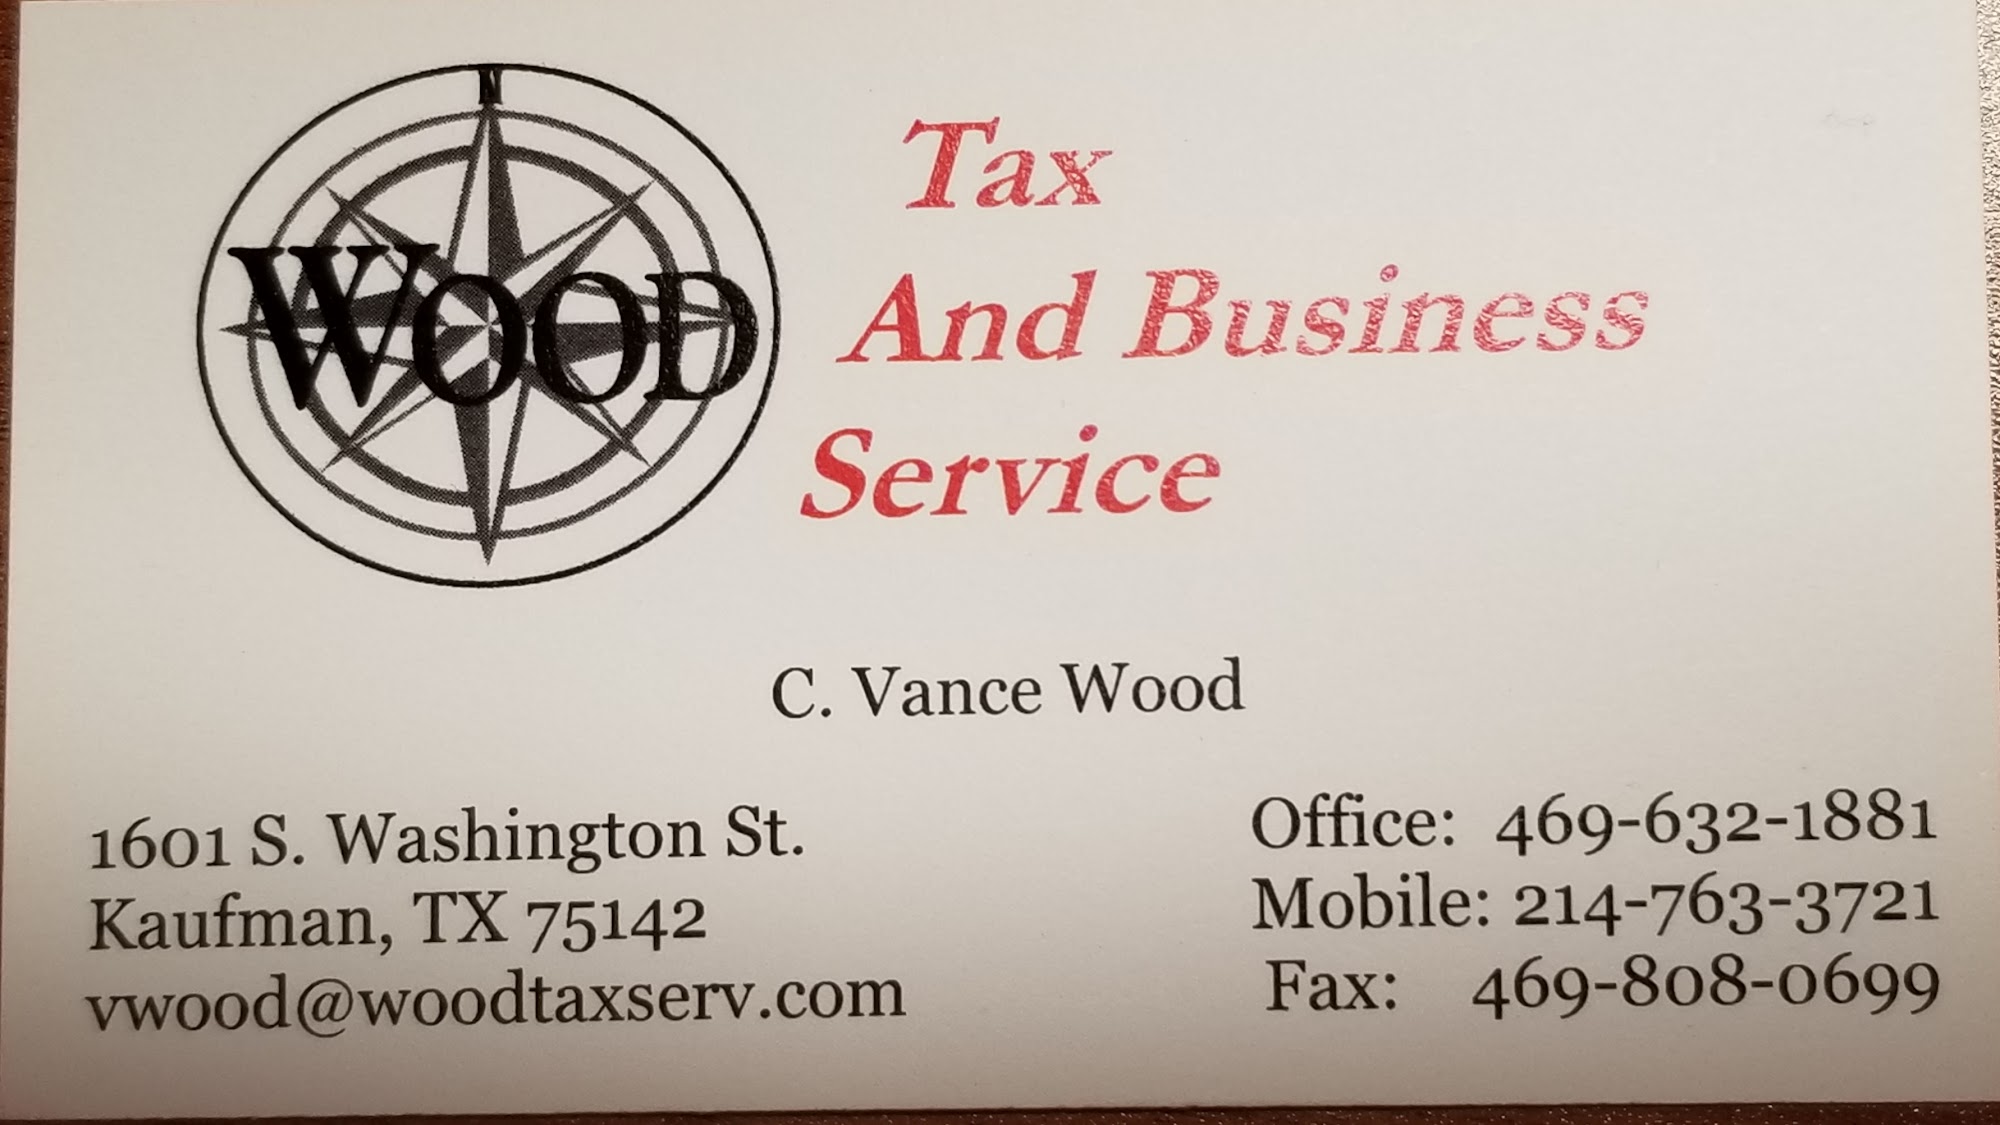 Wood Tax & Business Service